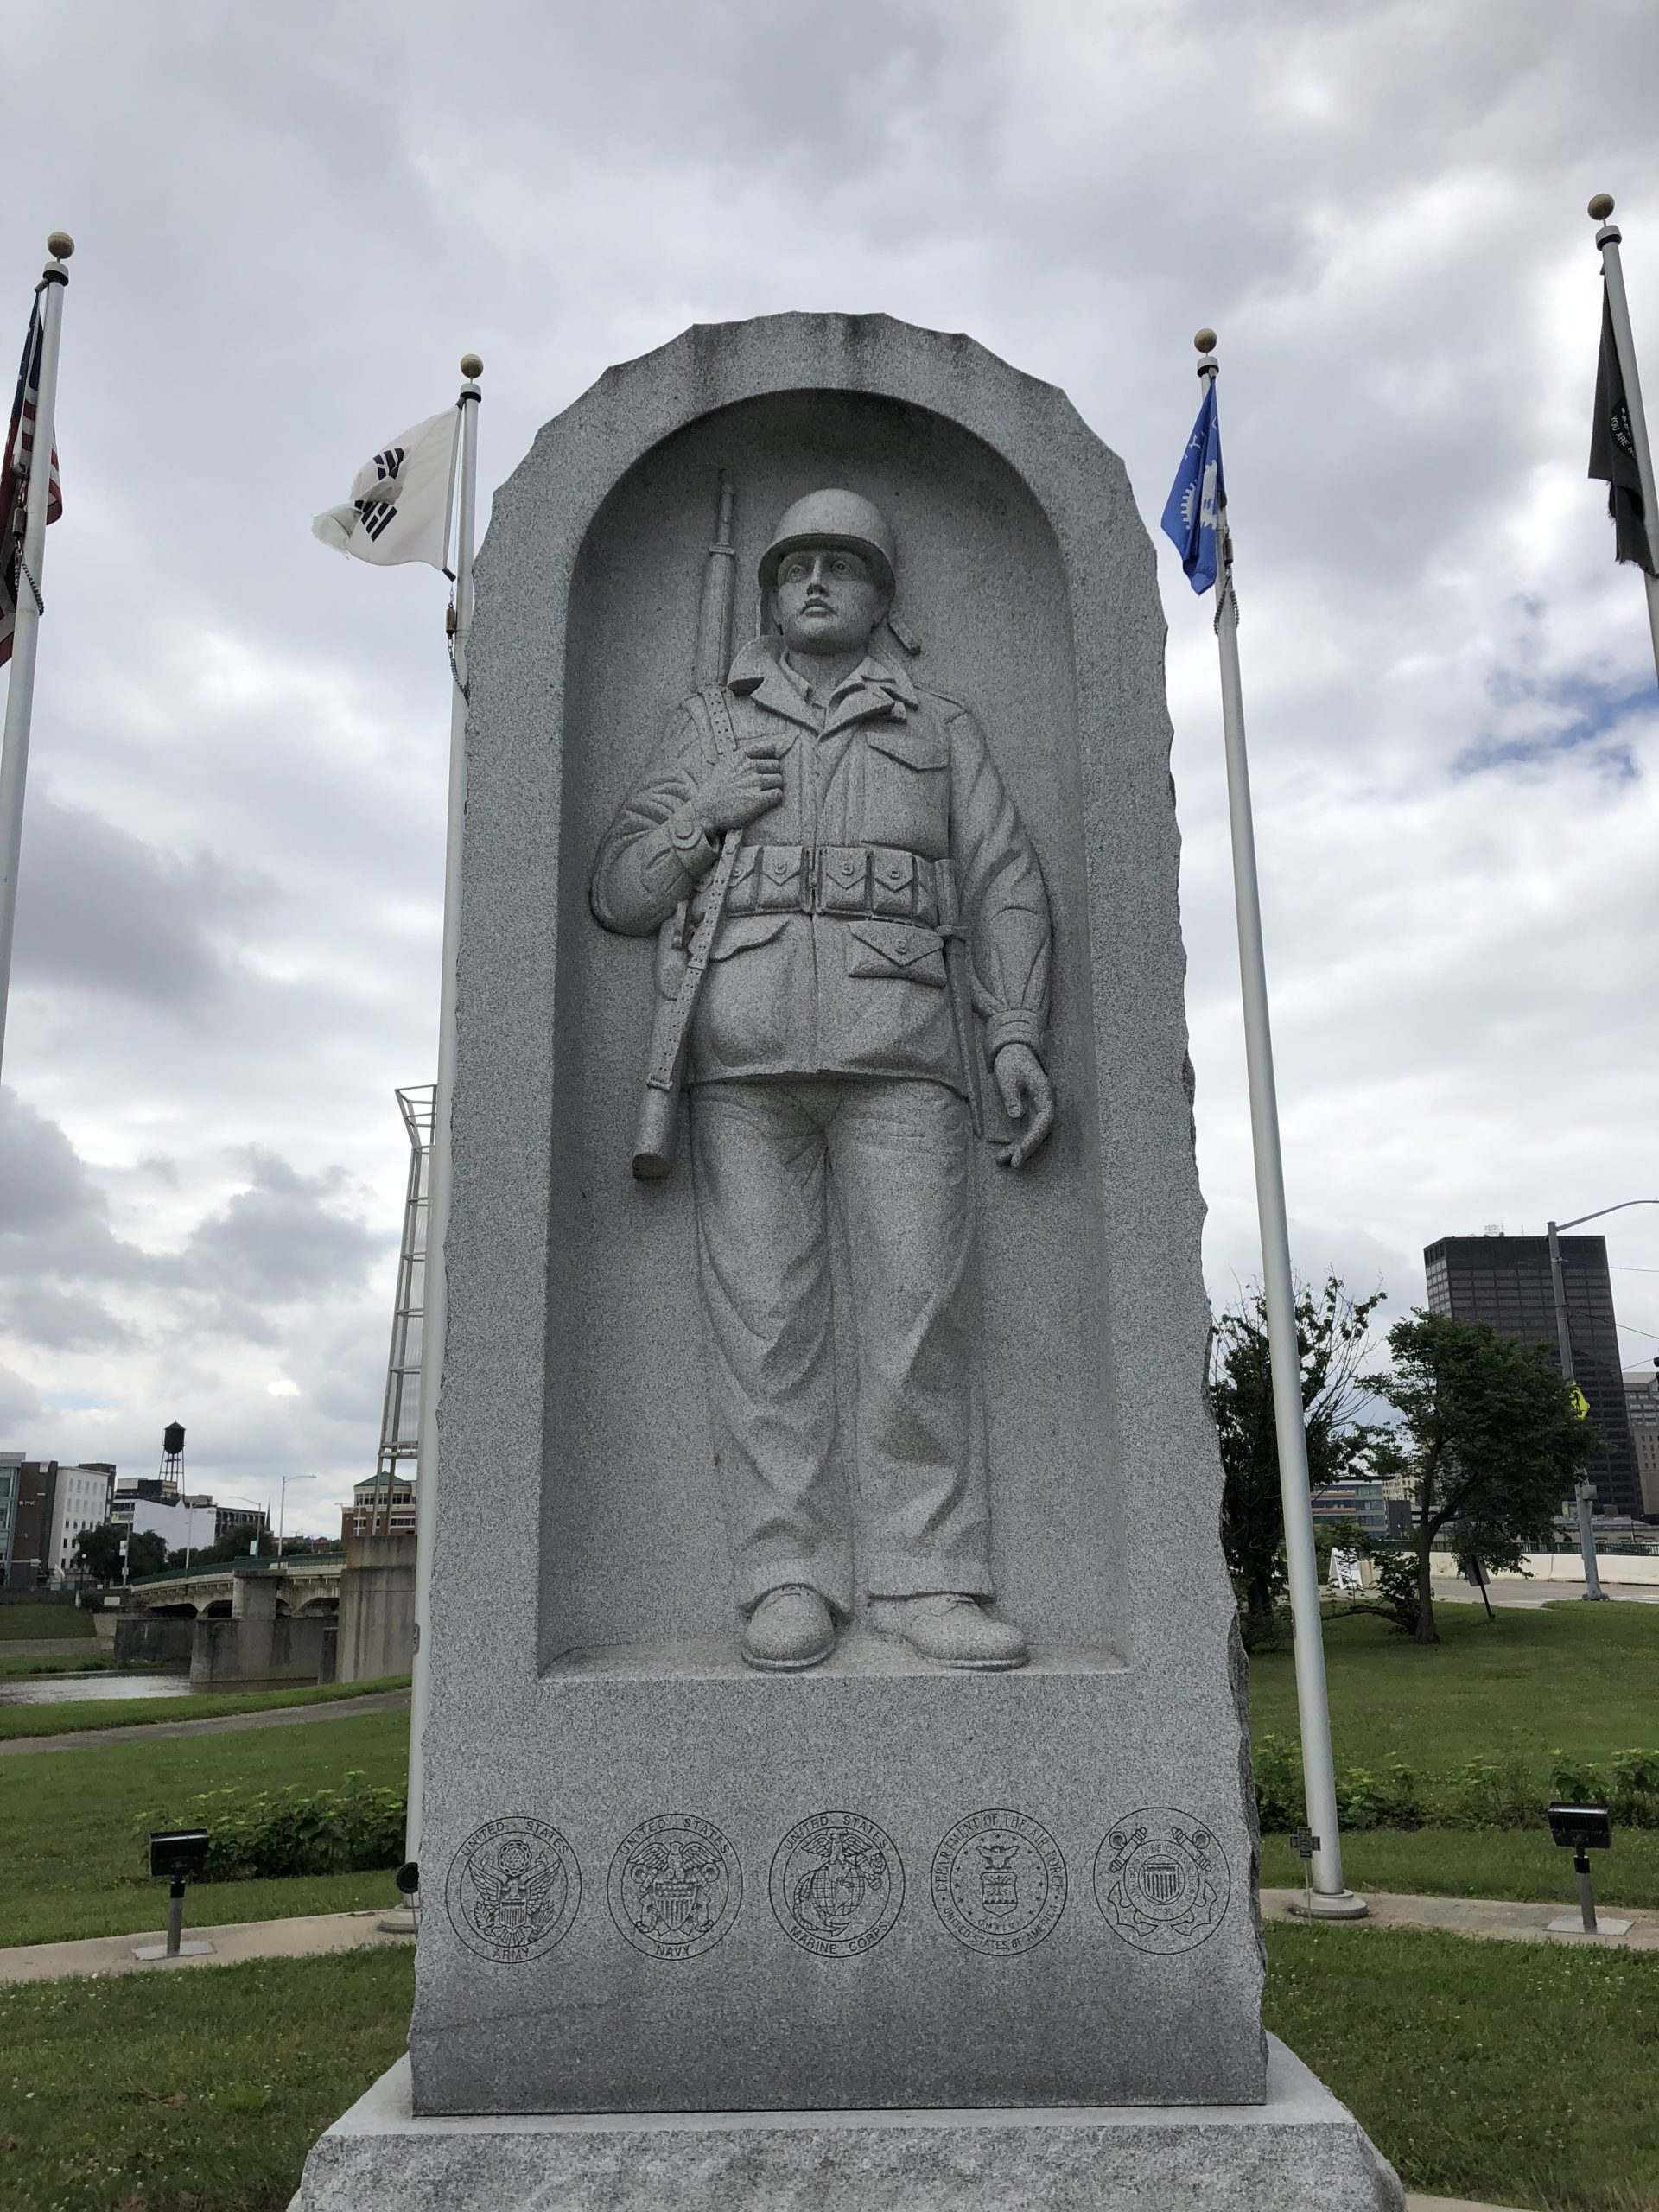 Korean War Memorials - Dayton